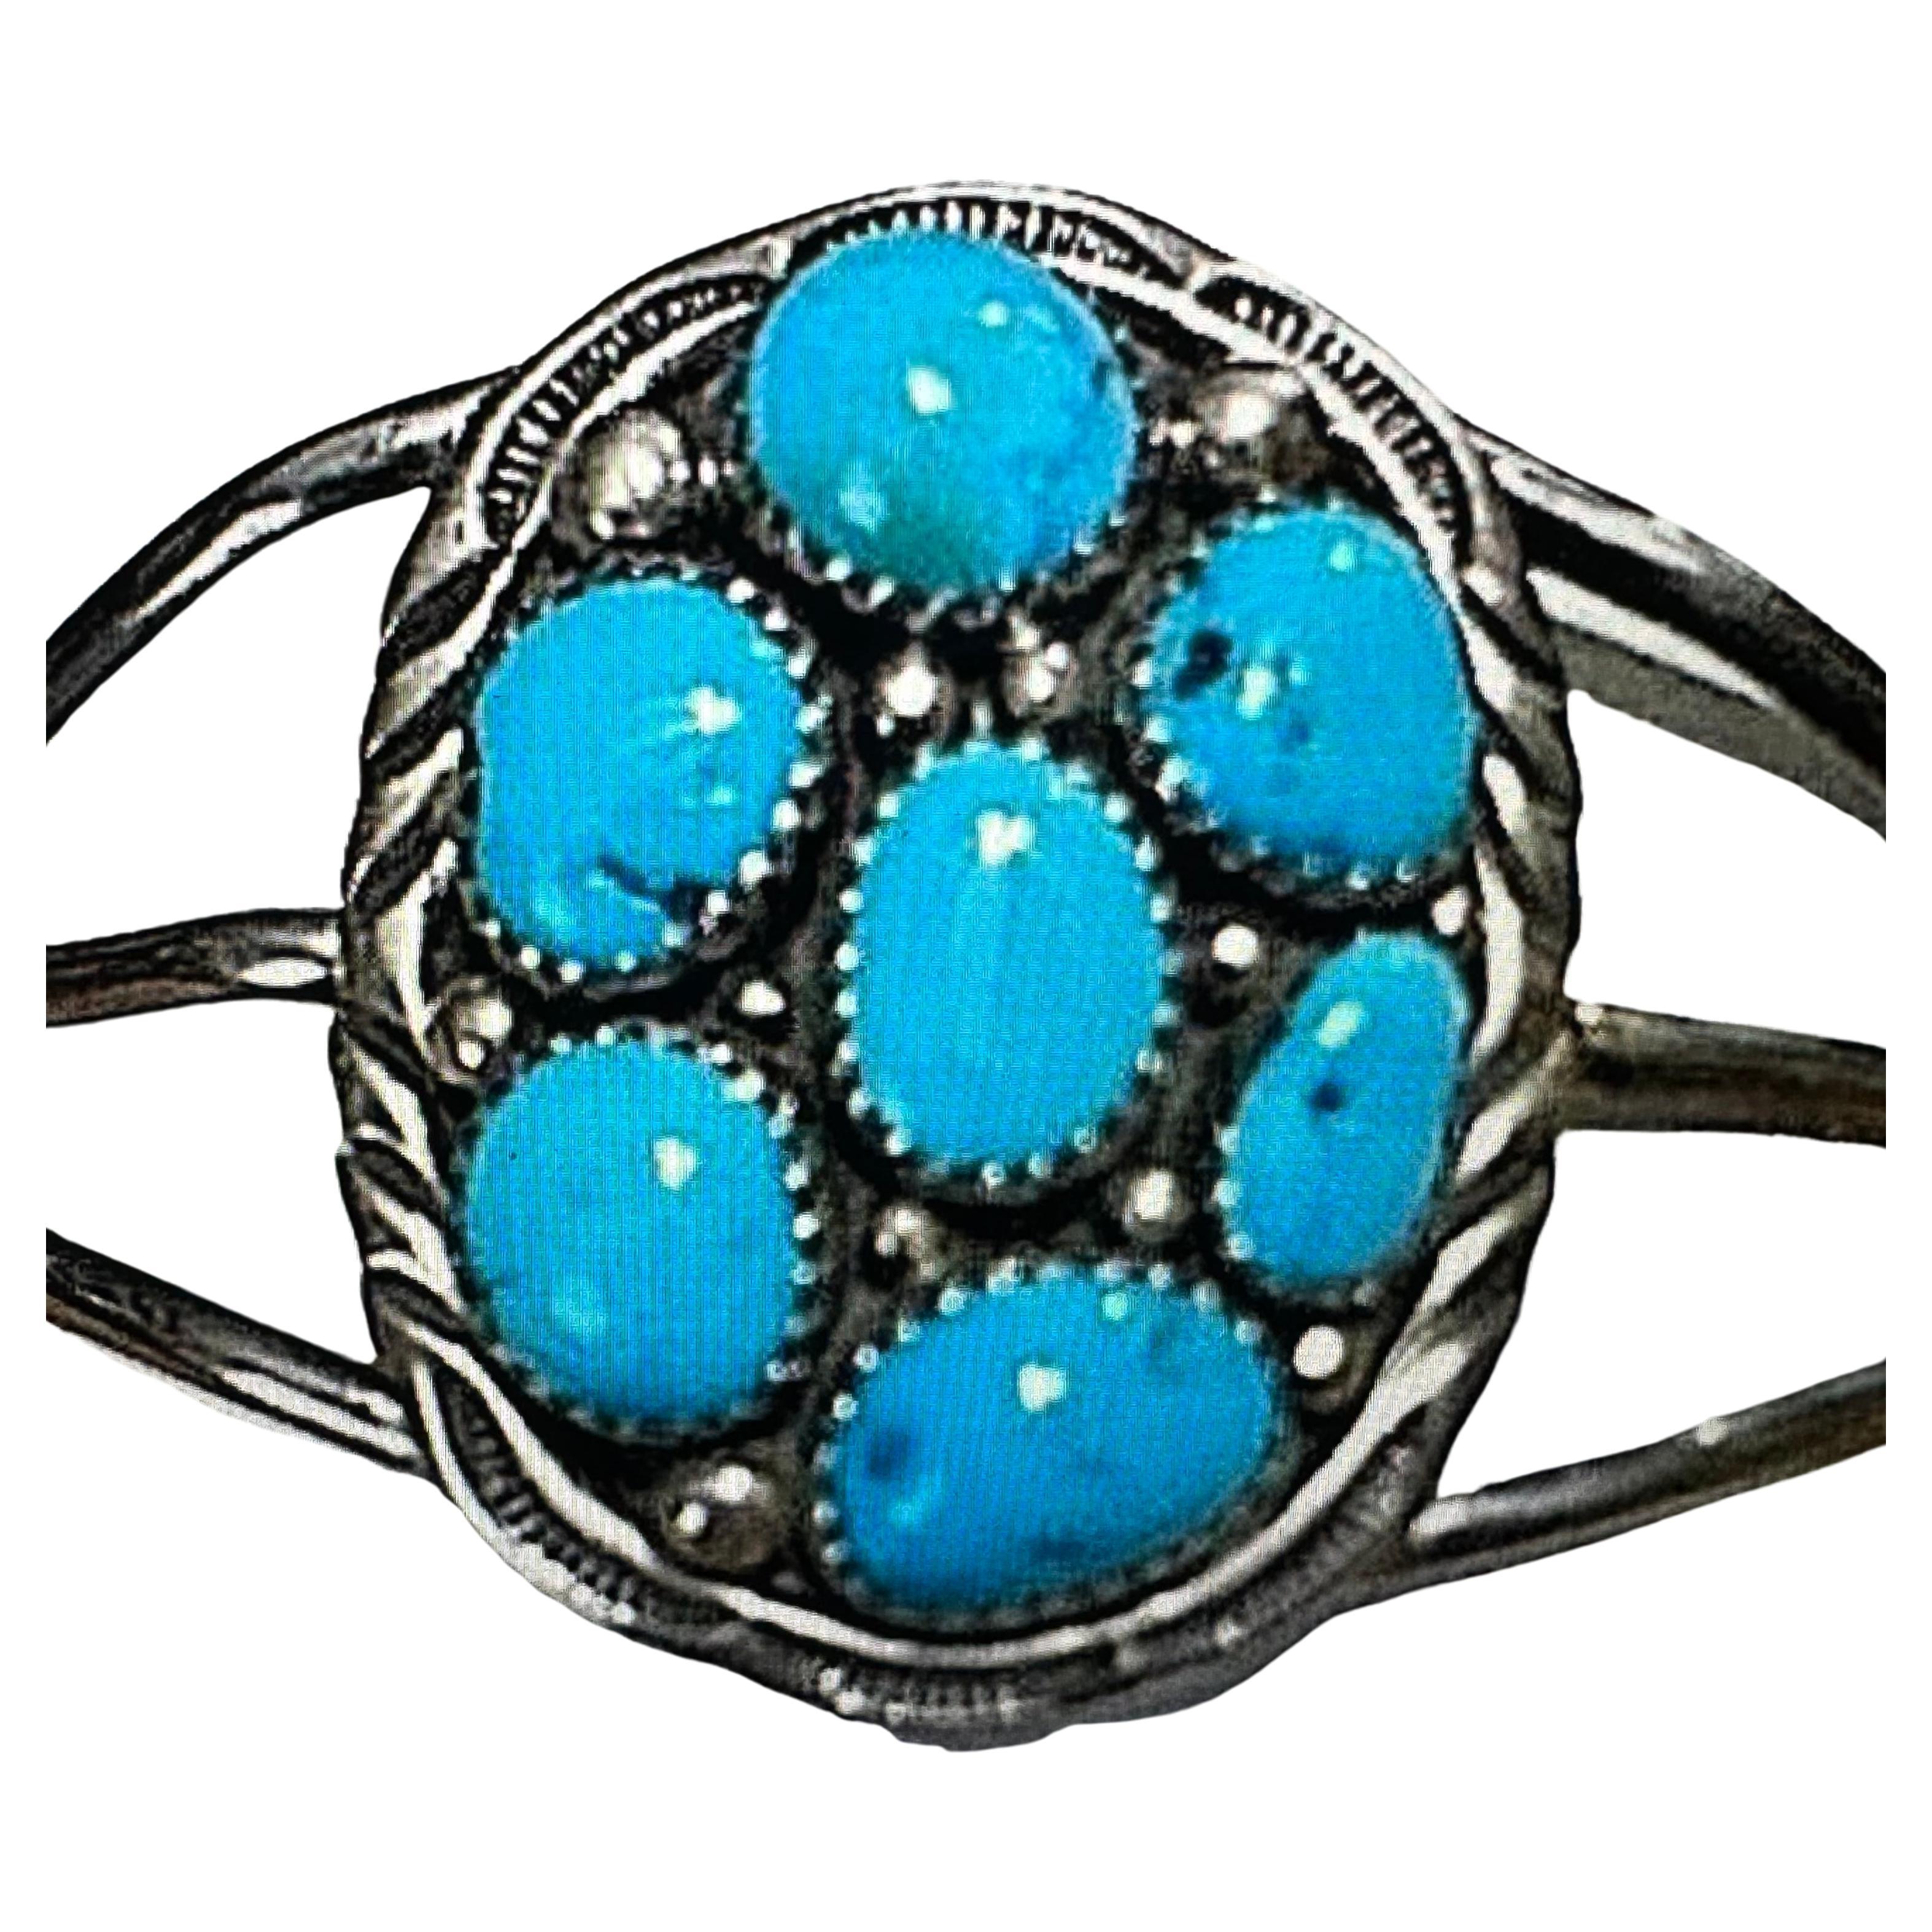 Navajo Sterling Silver .925 Sleeping BeautyTurquoise Mine Bracelet 
Hallmarked  F
2 1/2